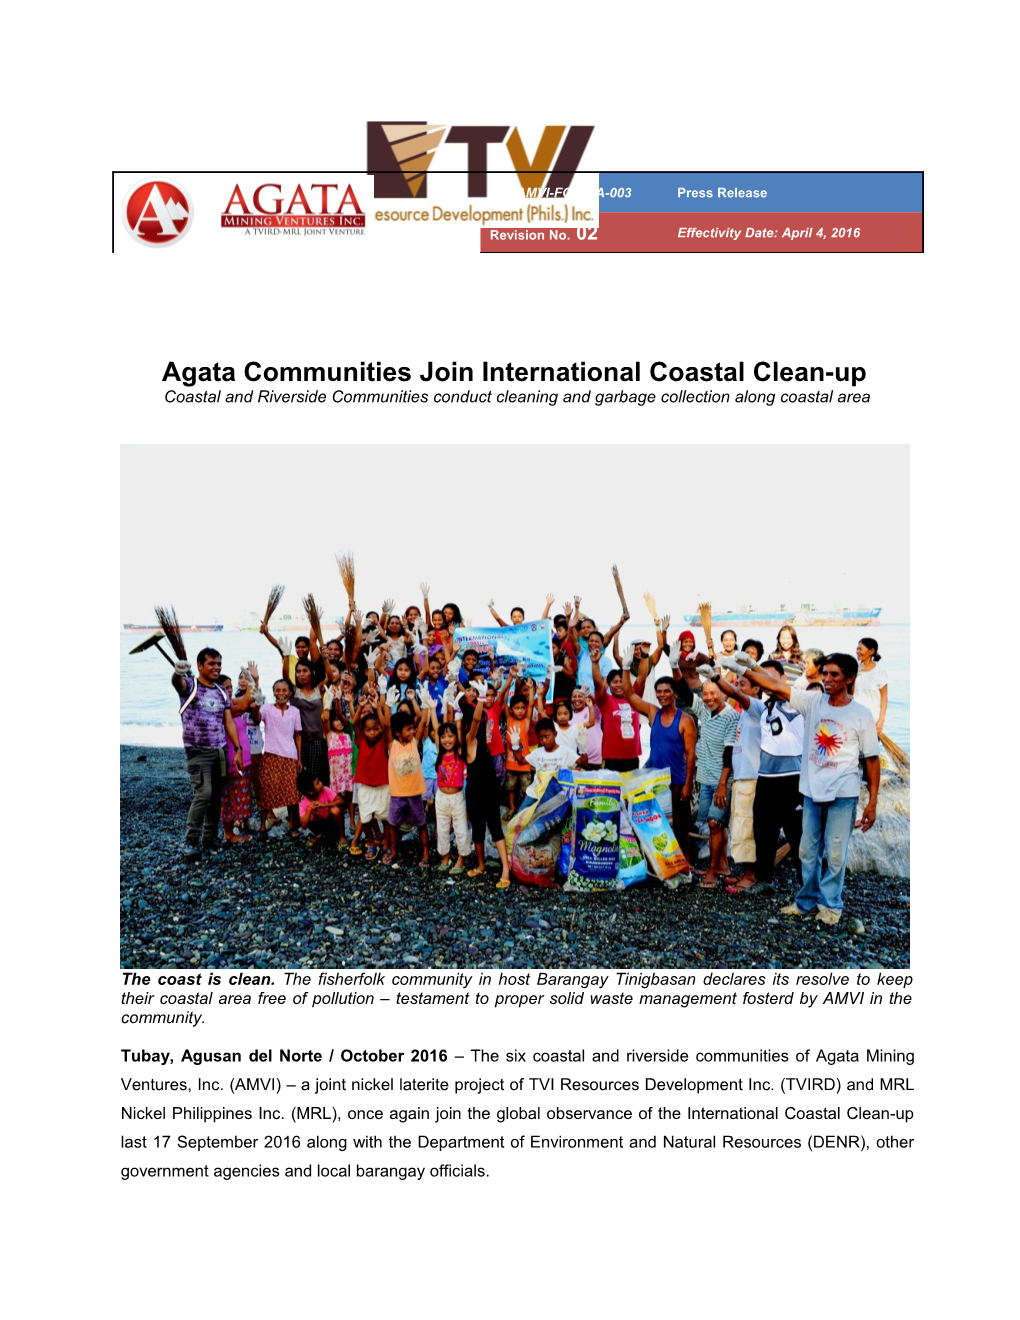 Agata Communities Join International Coastal Clean-Up